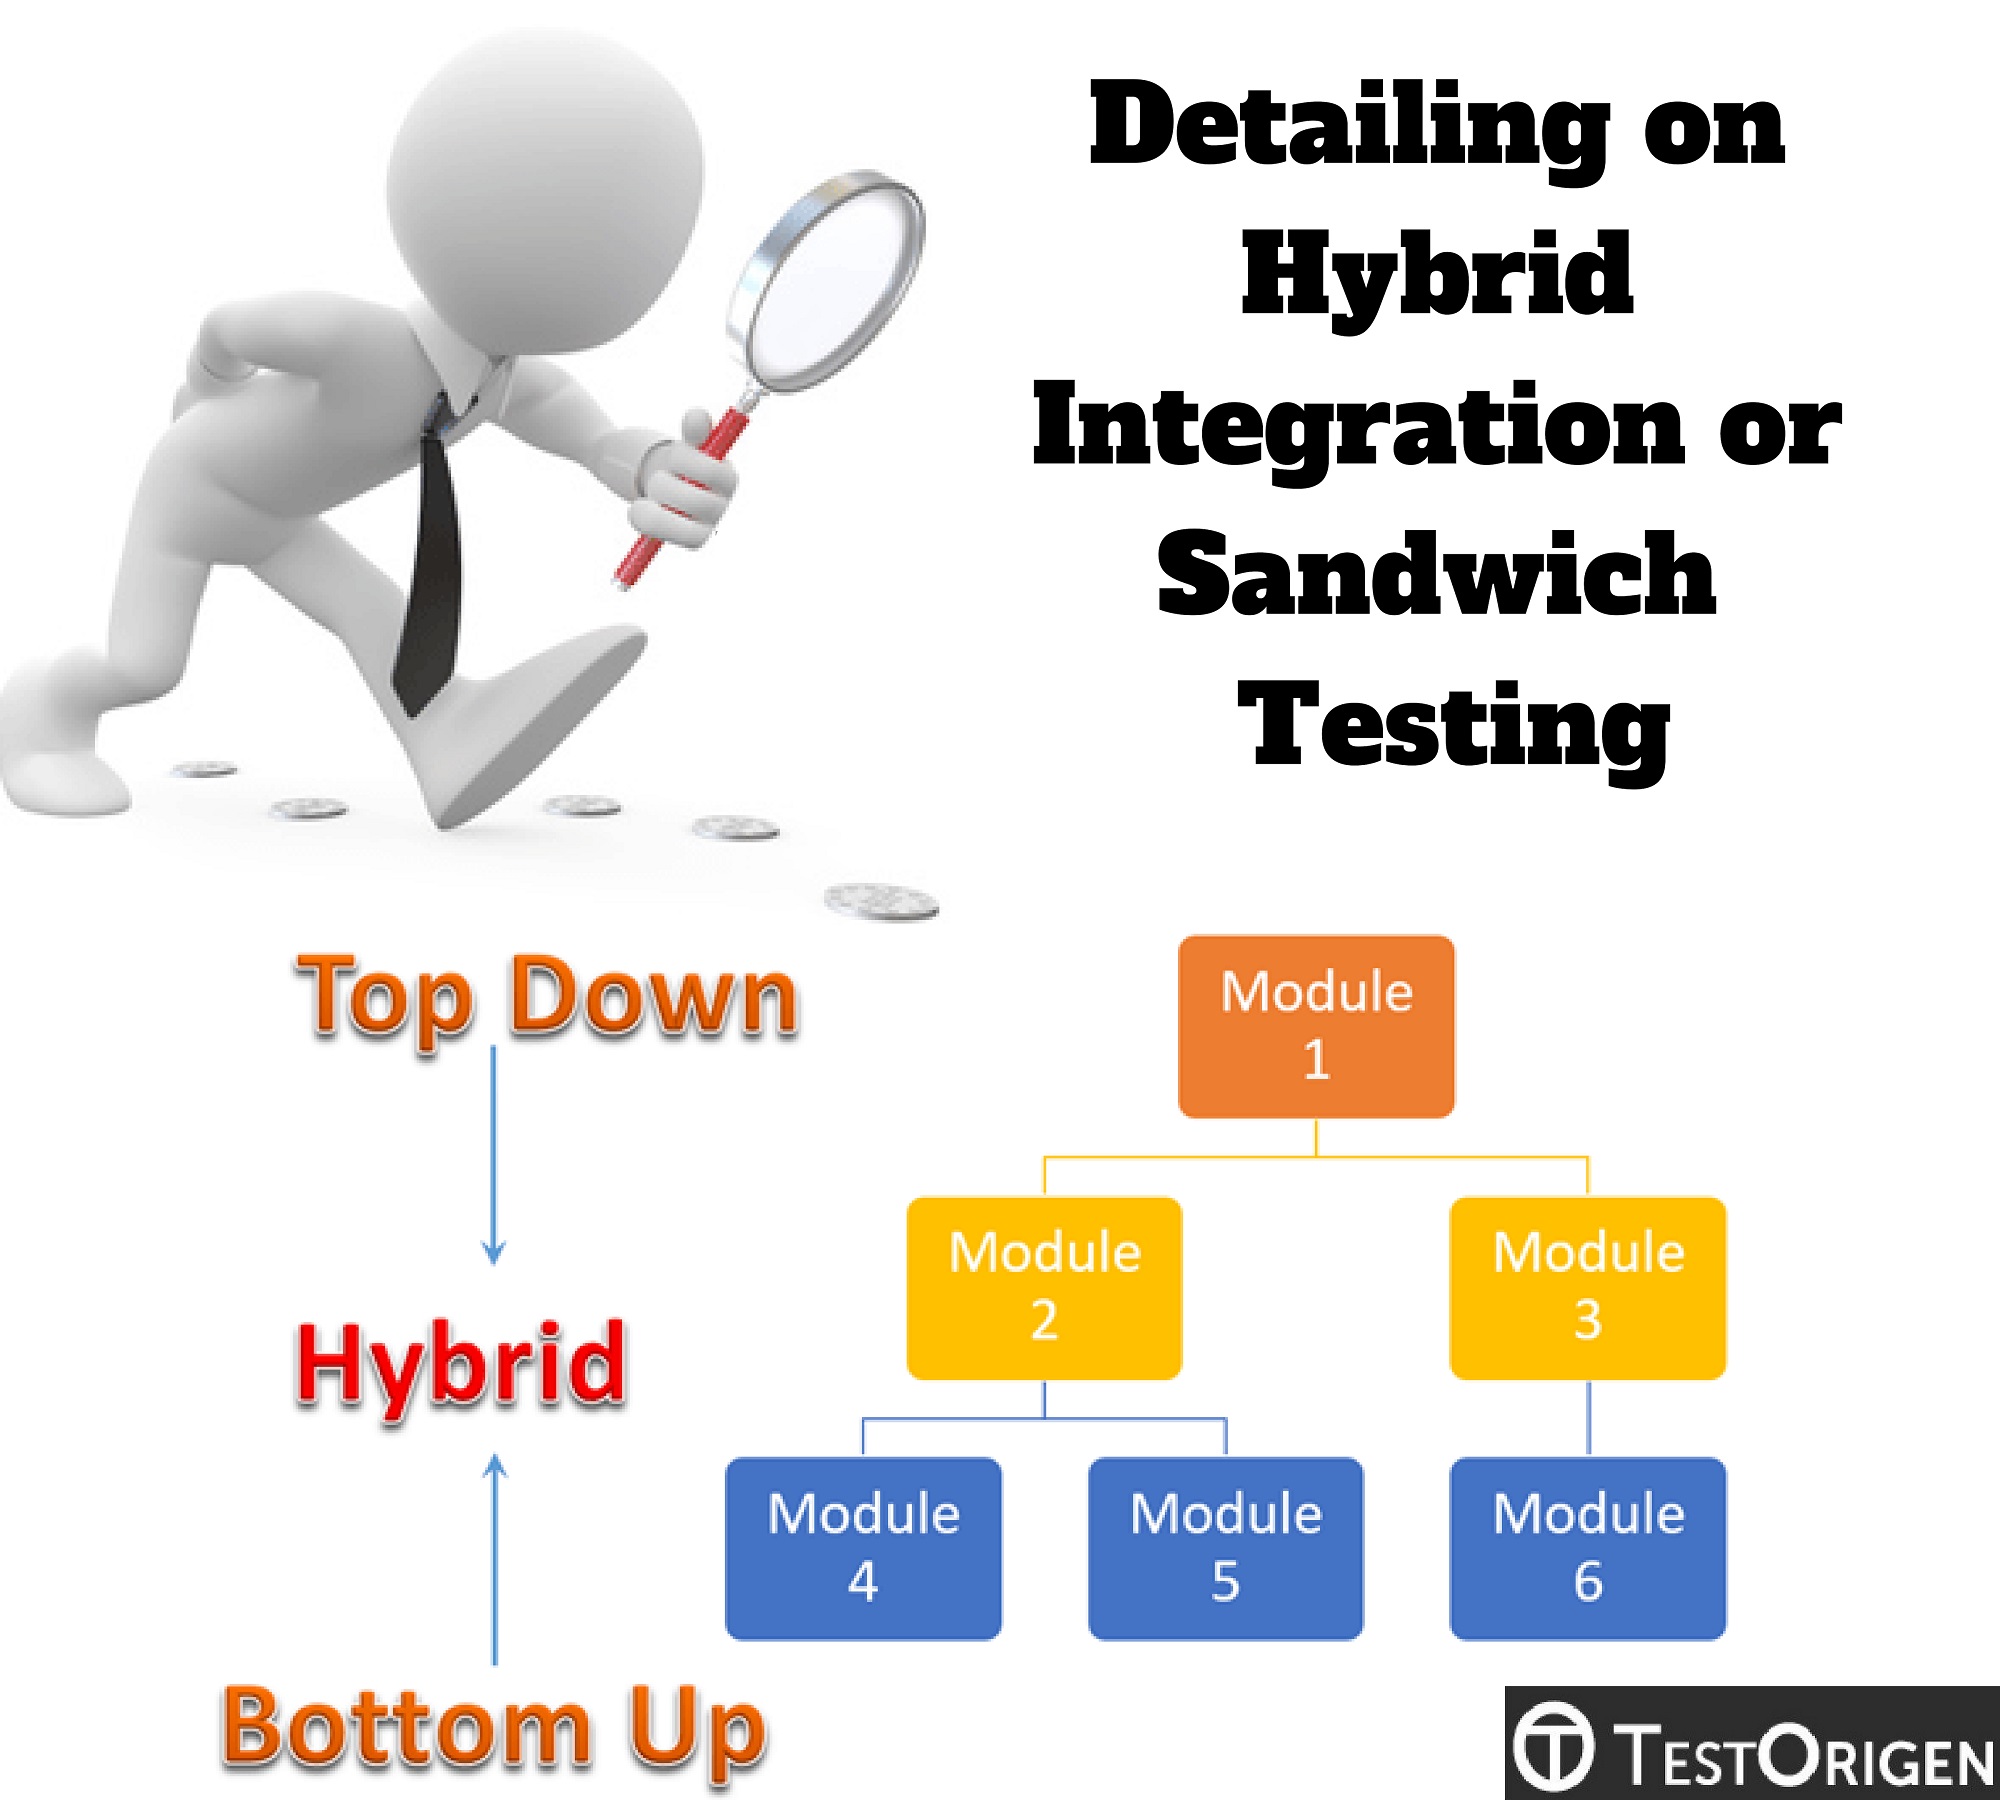 Detailing on Hybrid Integration or Sandwich Testing